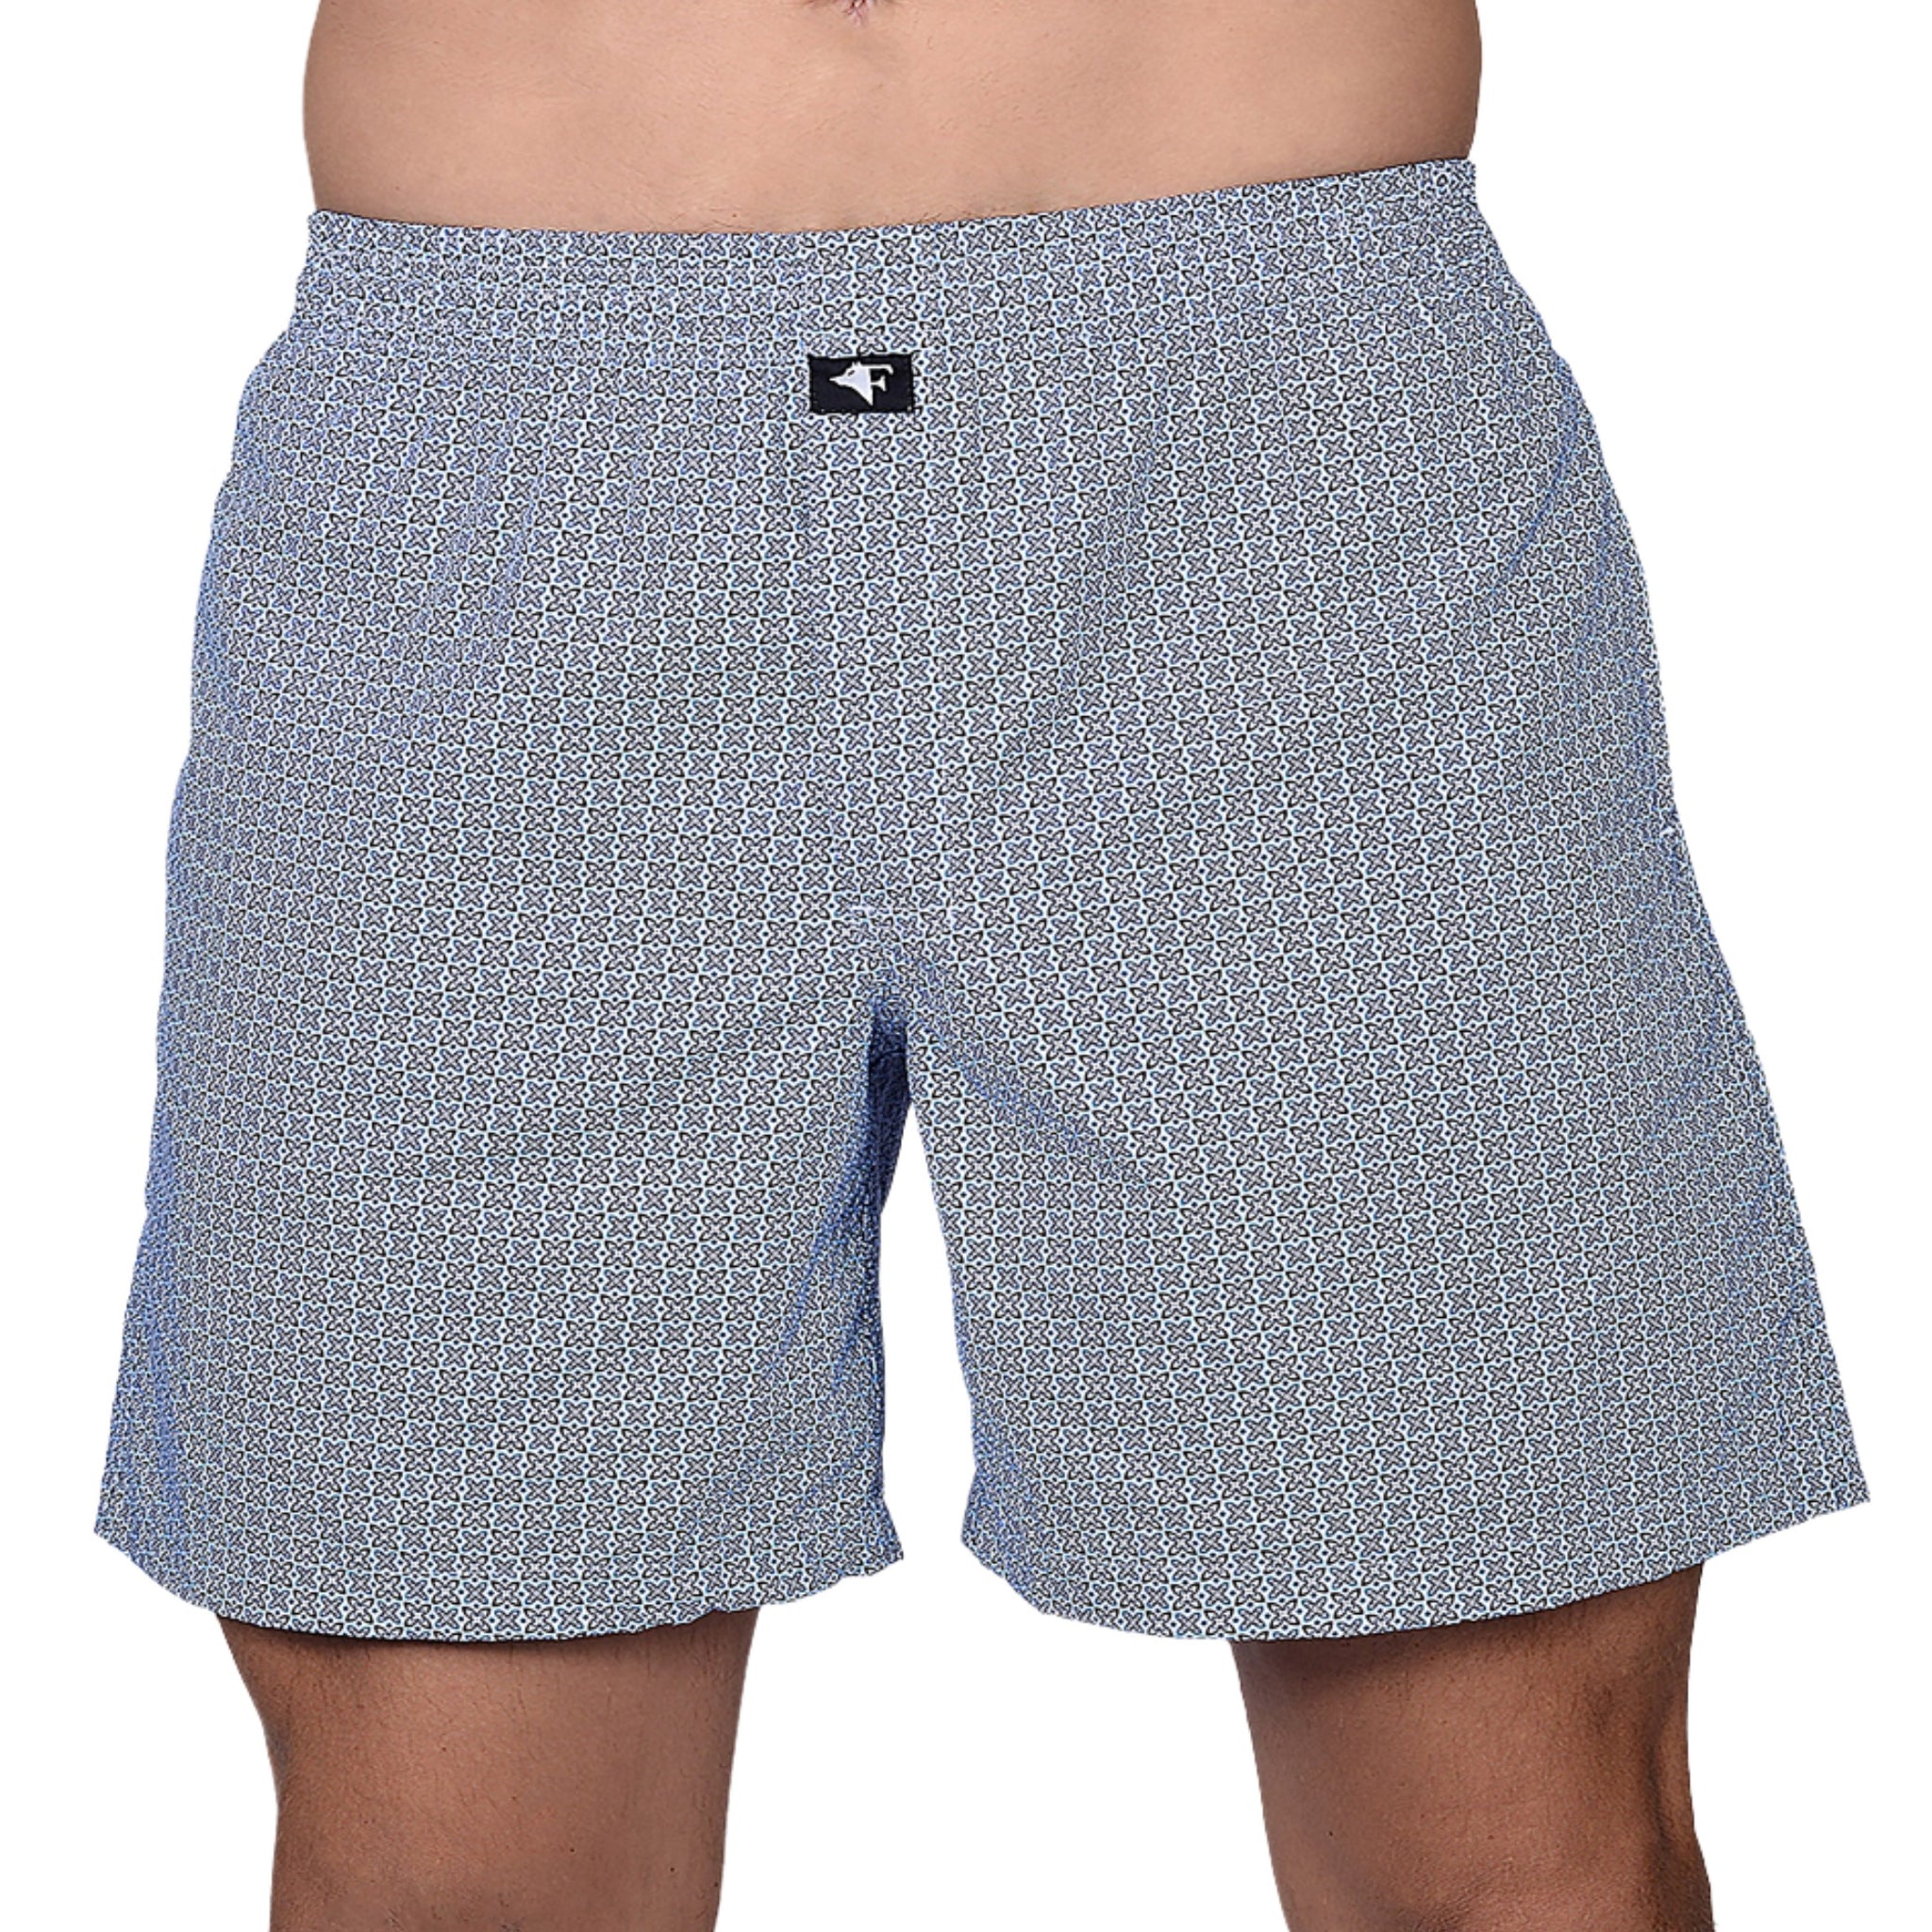 BOKSA Men's Printed Cotton Boxer Shorts with Side Pockets - Star Ocean